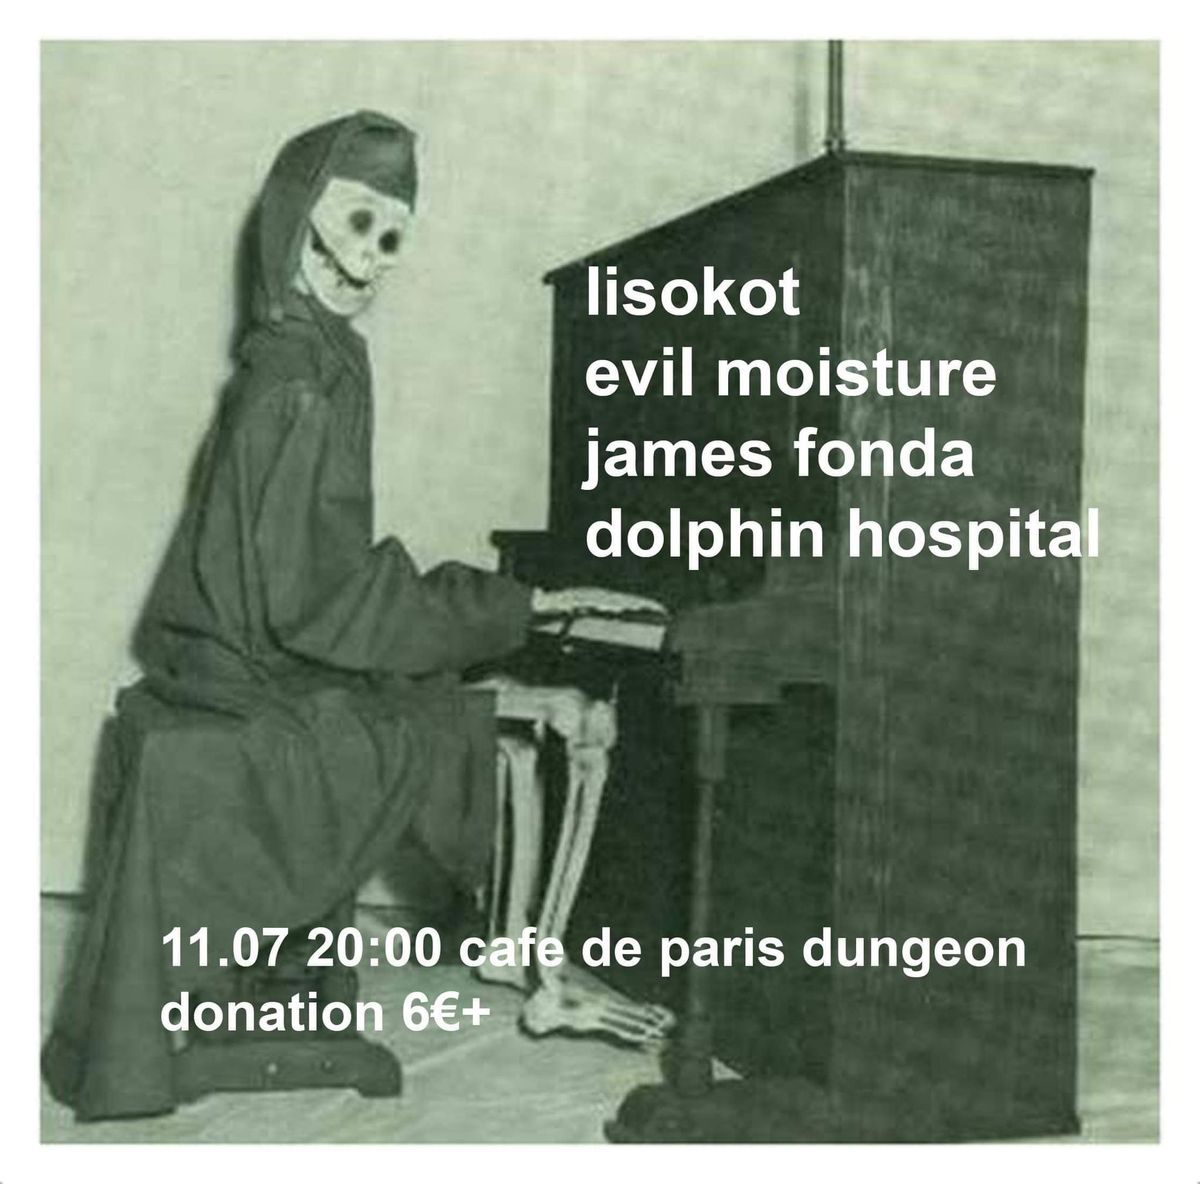 EVIL MOISTURE | LISOKOT | JAMES FONDA | DOLPHIN HOSPITAL - Cave du Caf\u00e9 de Paris